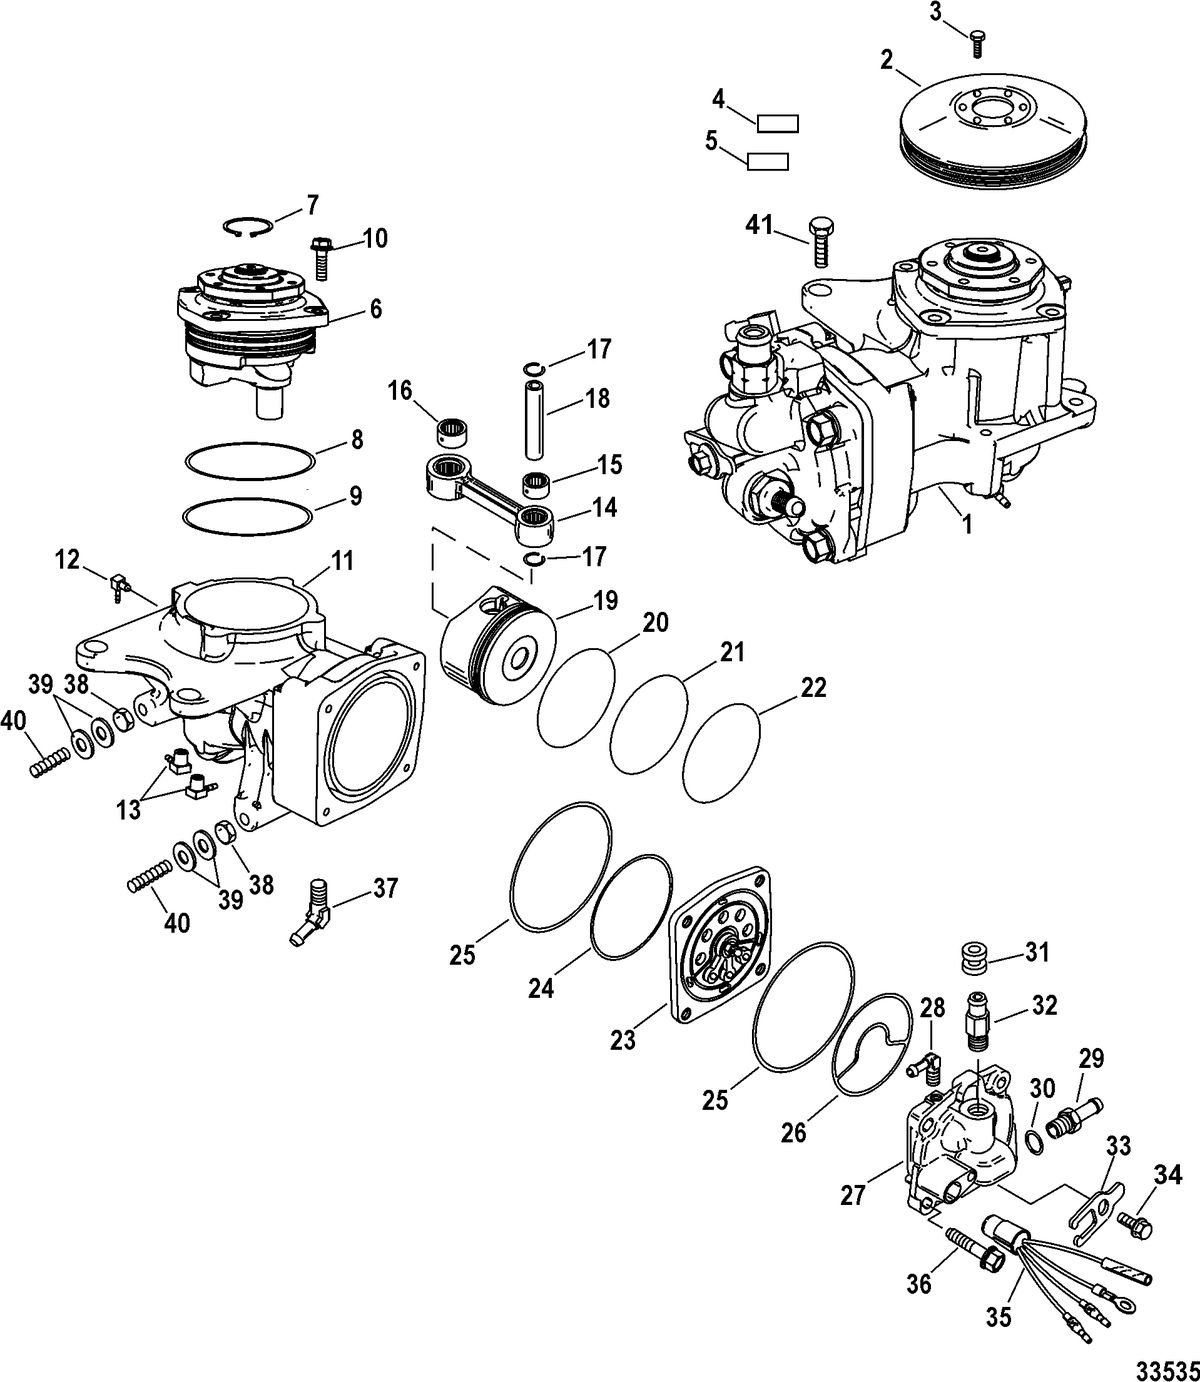 SPORTJET 200 DFI JET DRIVE Air Compressor Components(Design III)